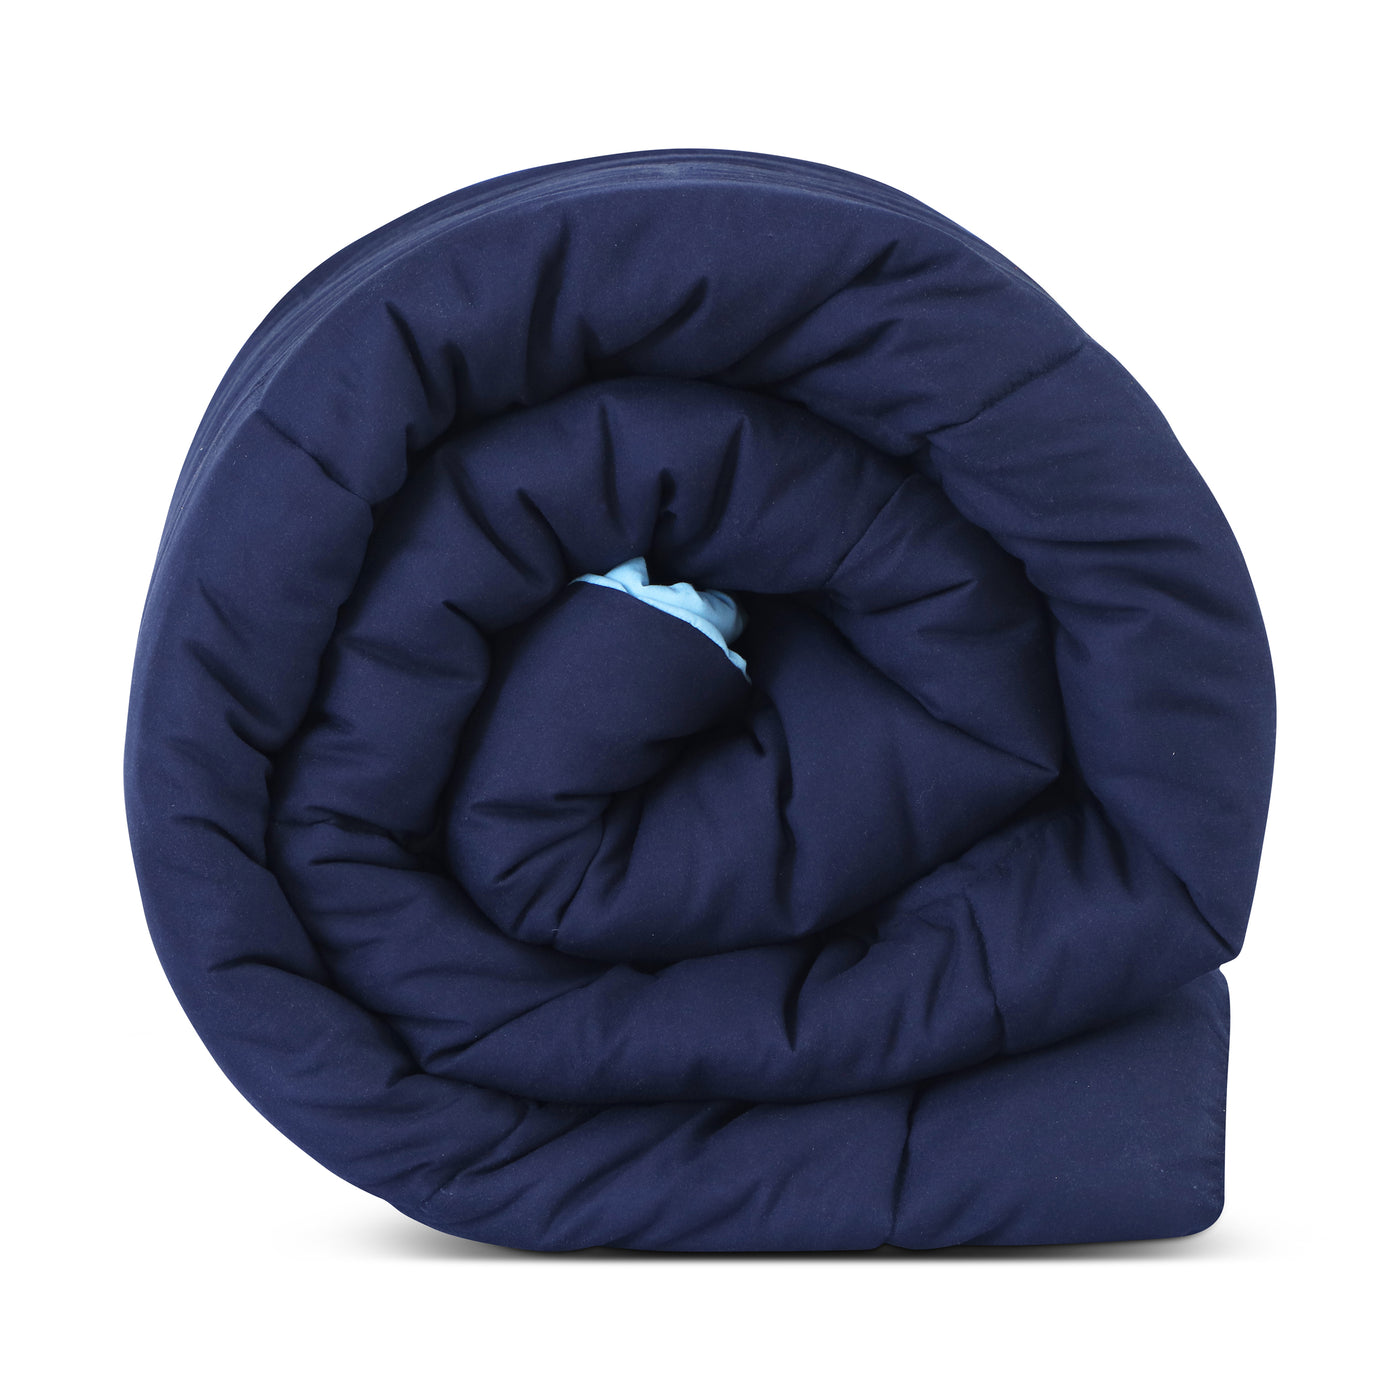 Vibgyor Soft and Light Weight Microfiber Reversible Winter Quilt,Comforter